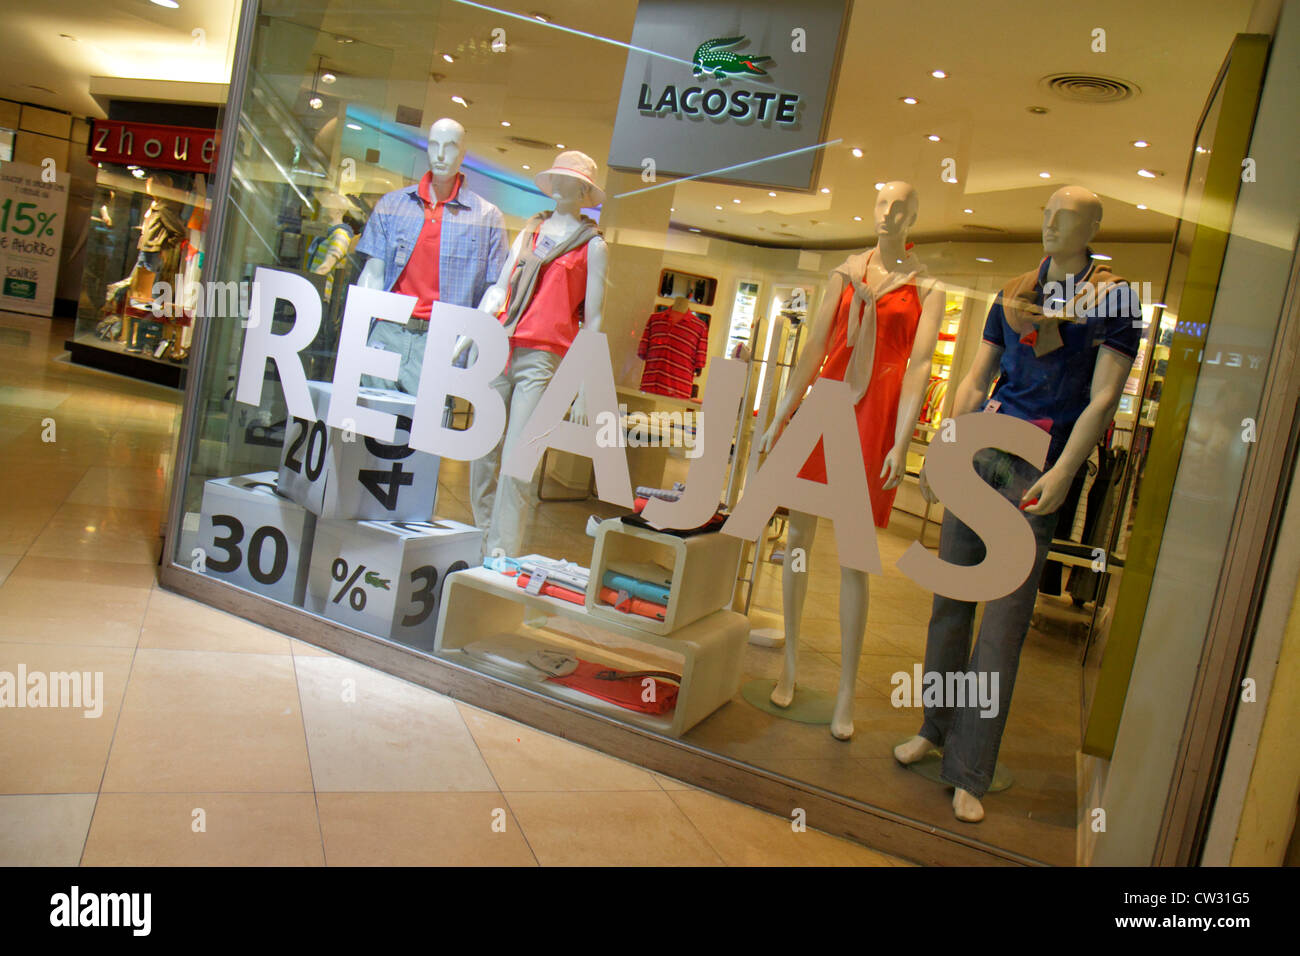 Malaysia lacoste Buy Footwear